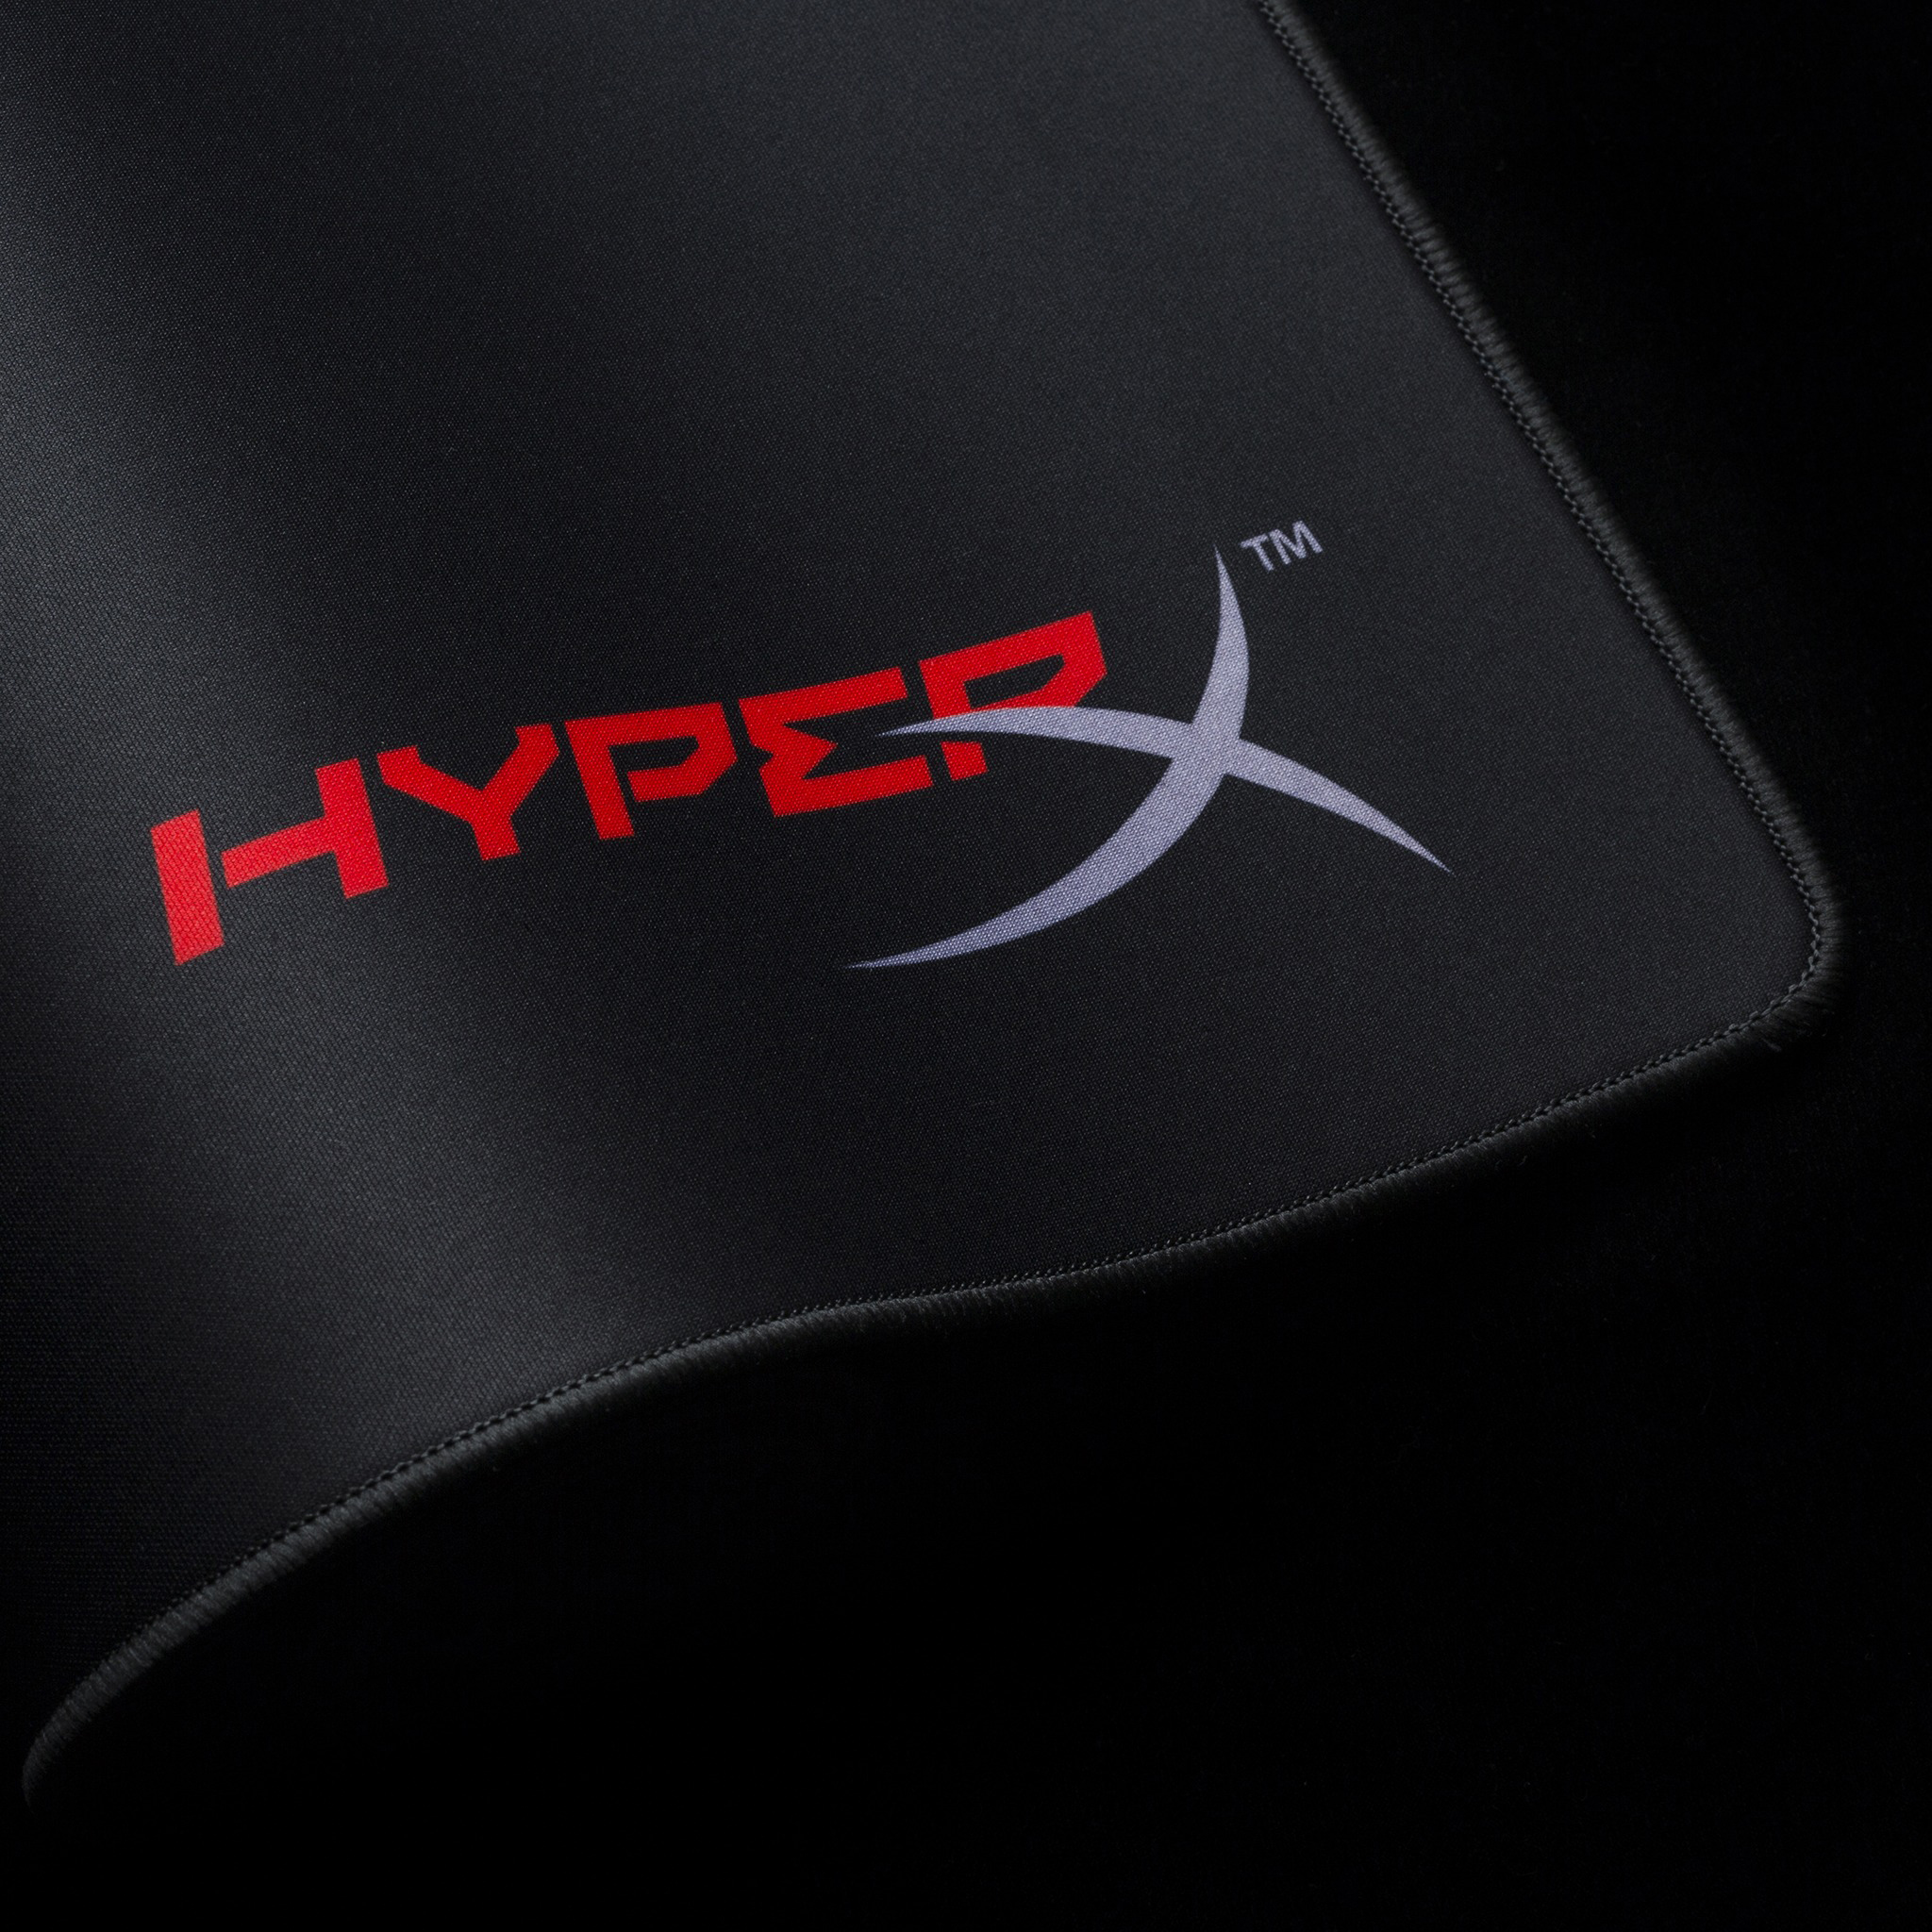 HYPERX FURY mm mm) (300 S x 360 Pro M Mauspad Gaming